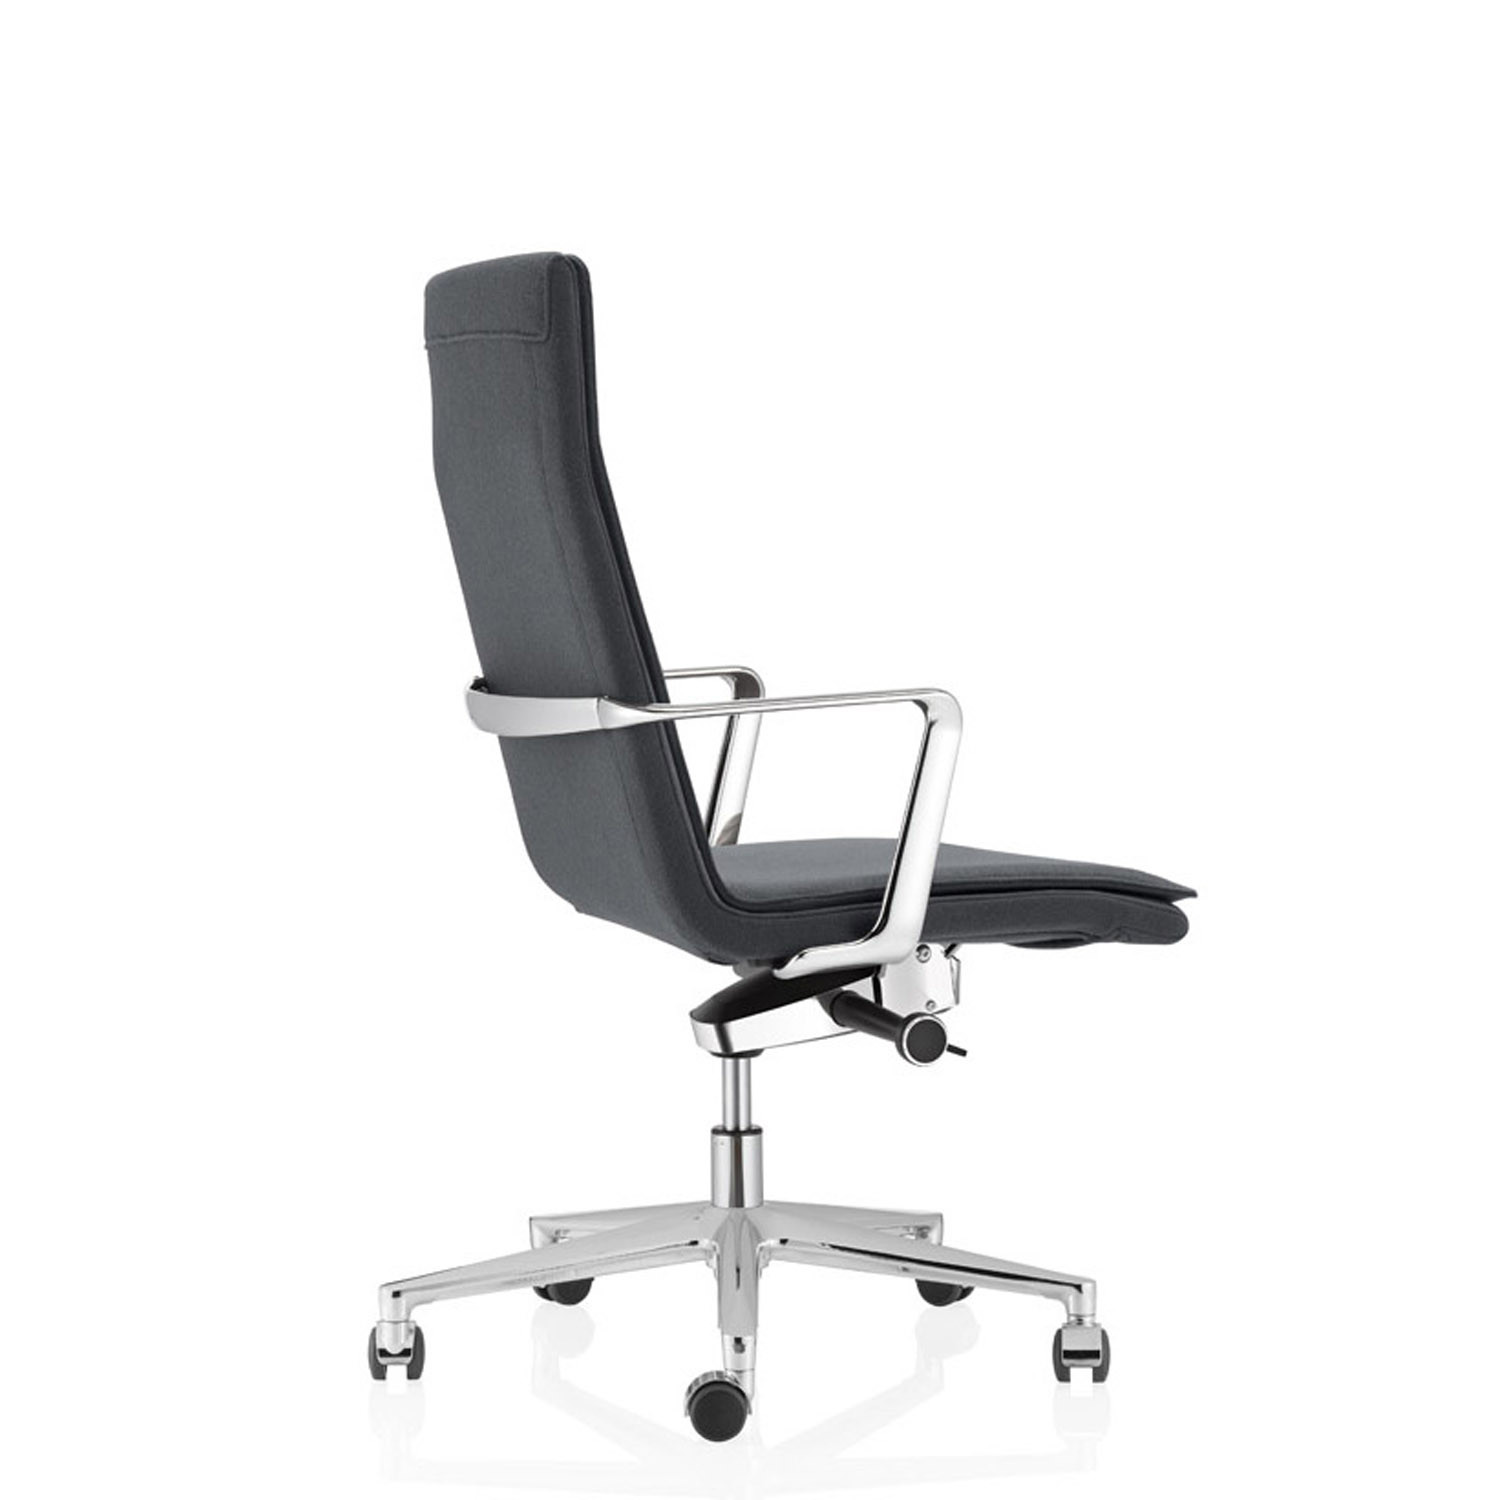 Valea Soft Chair by ICF Spa